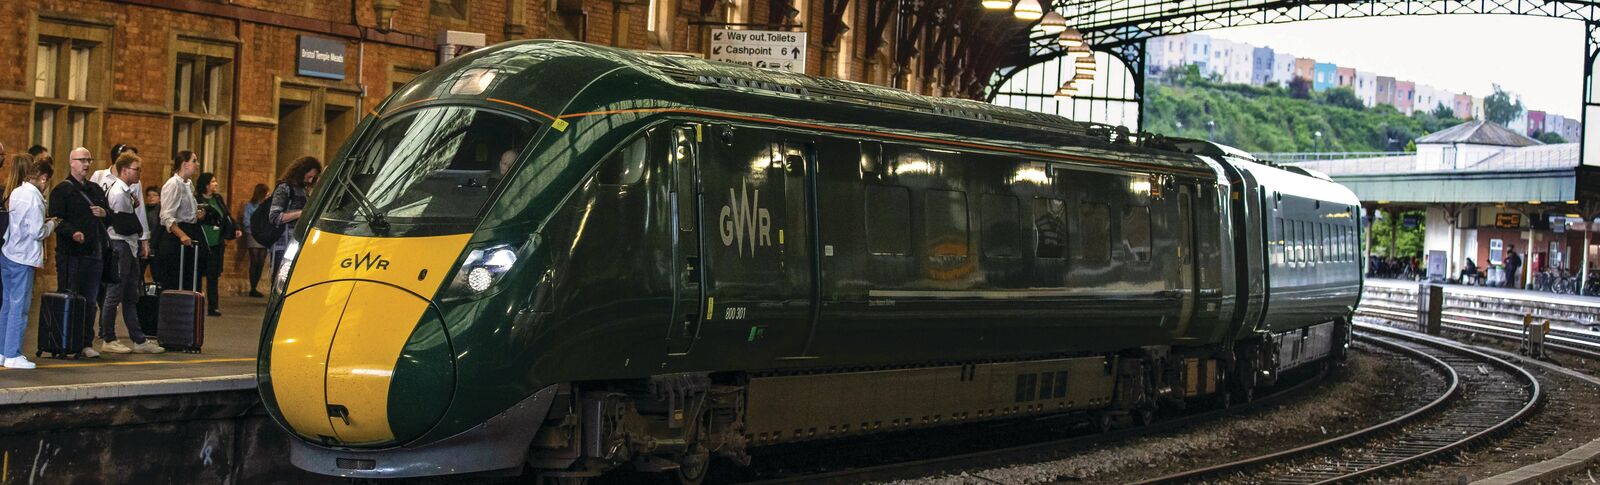 GWR Train at platform